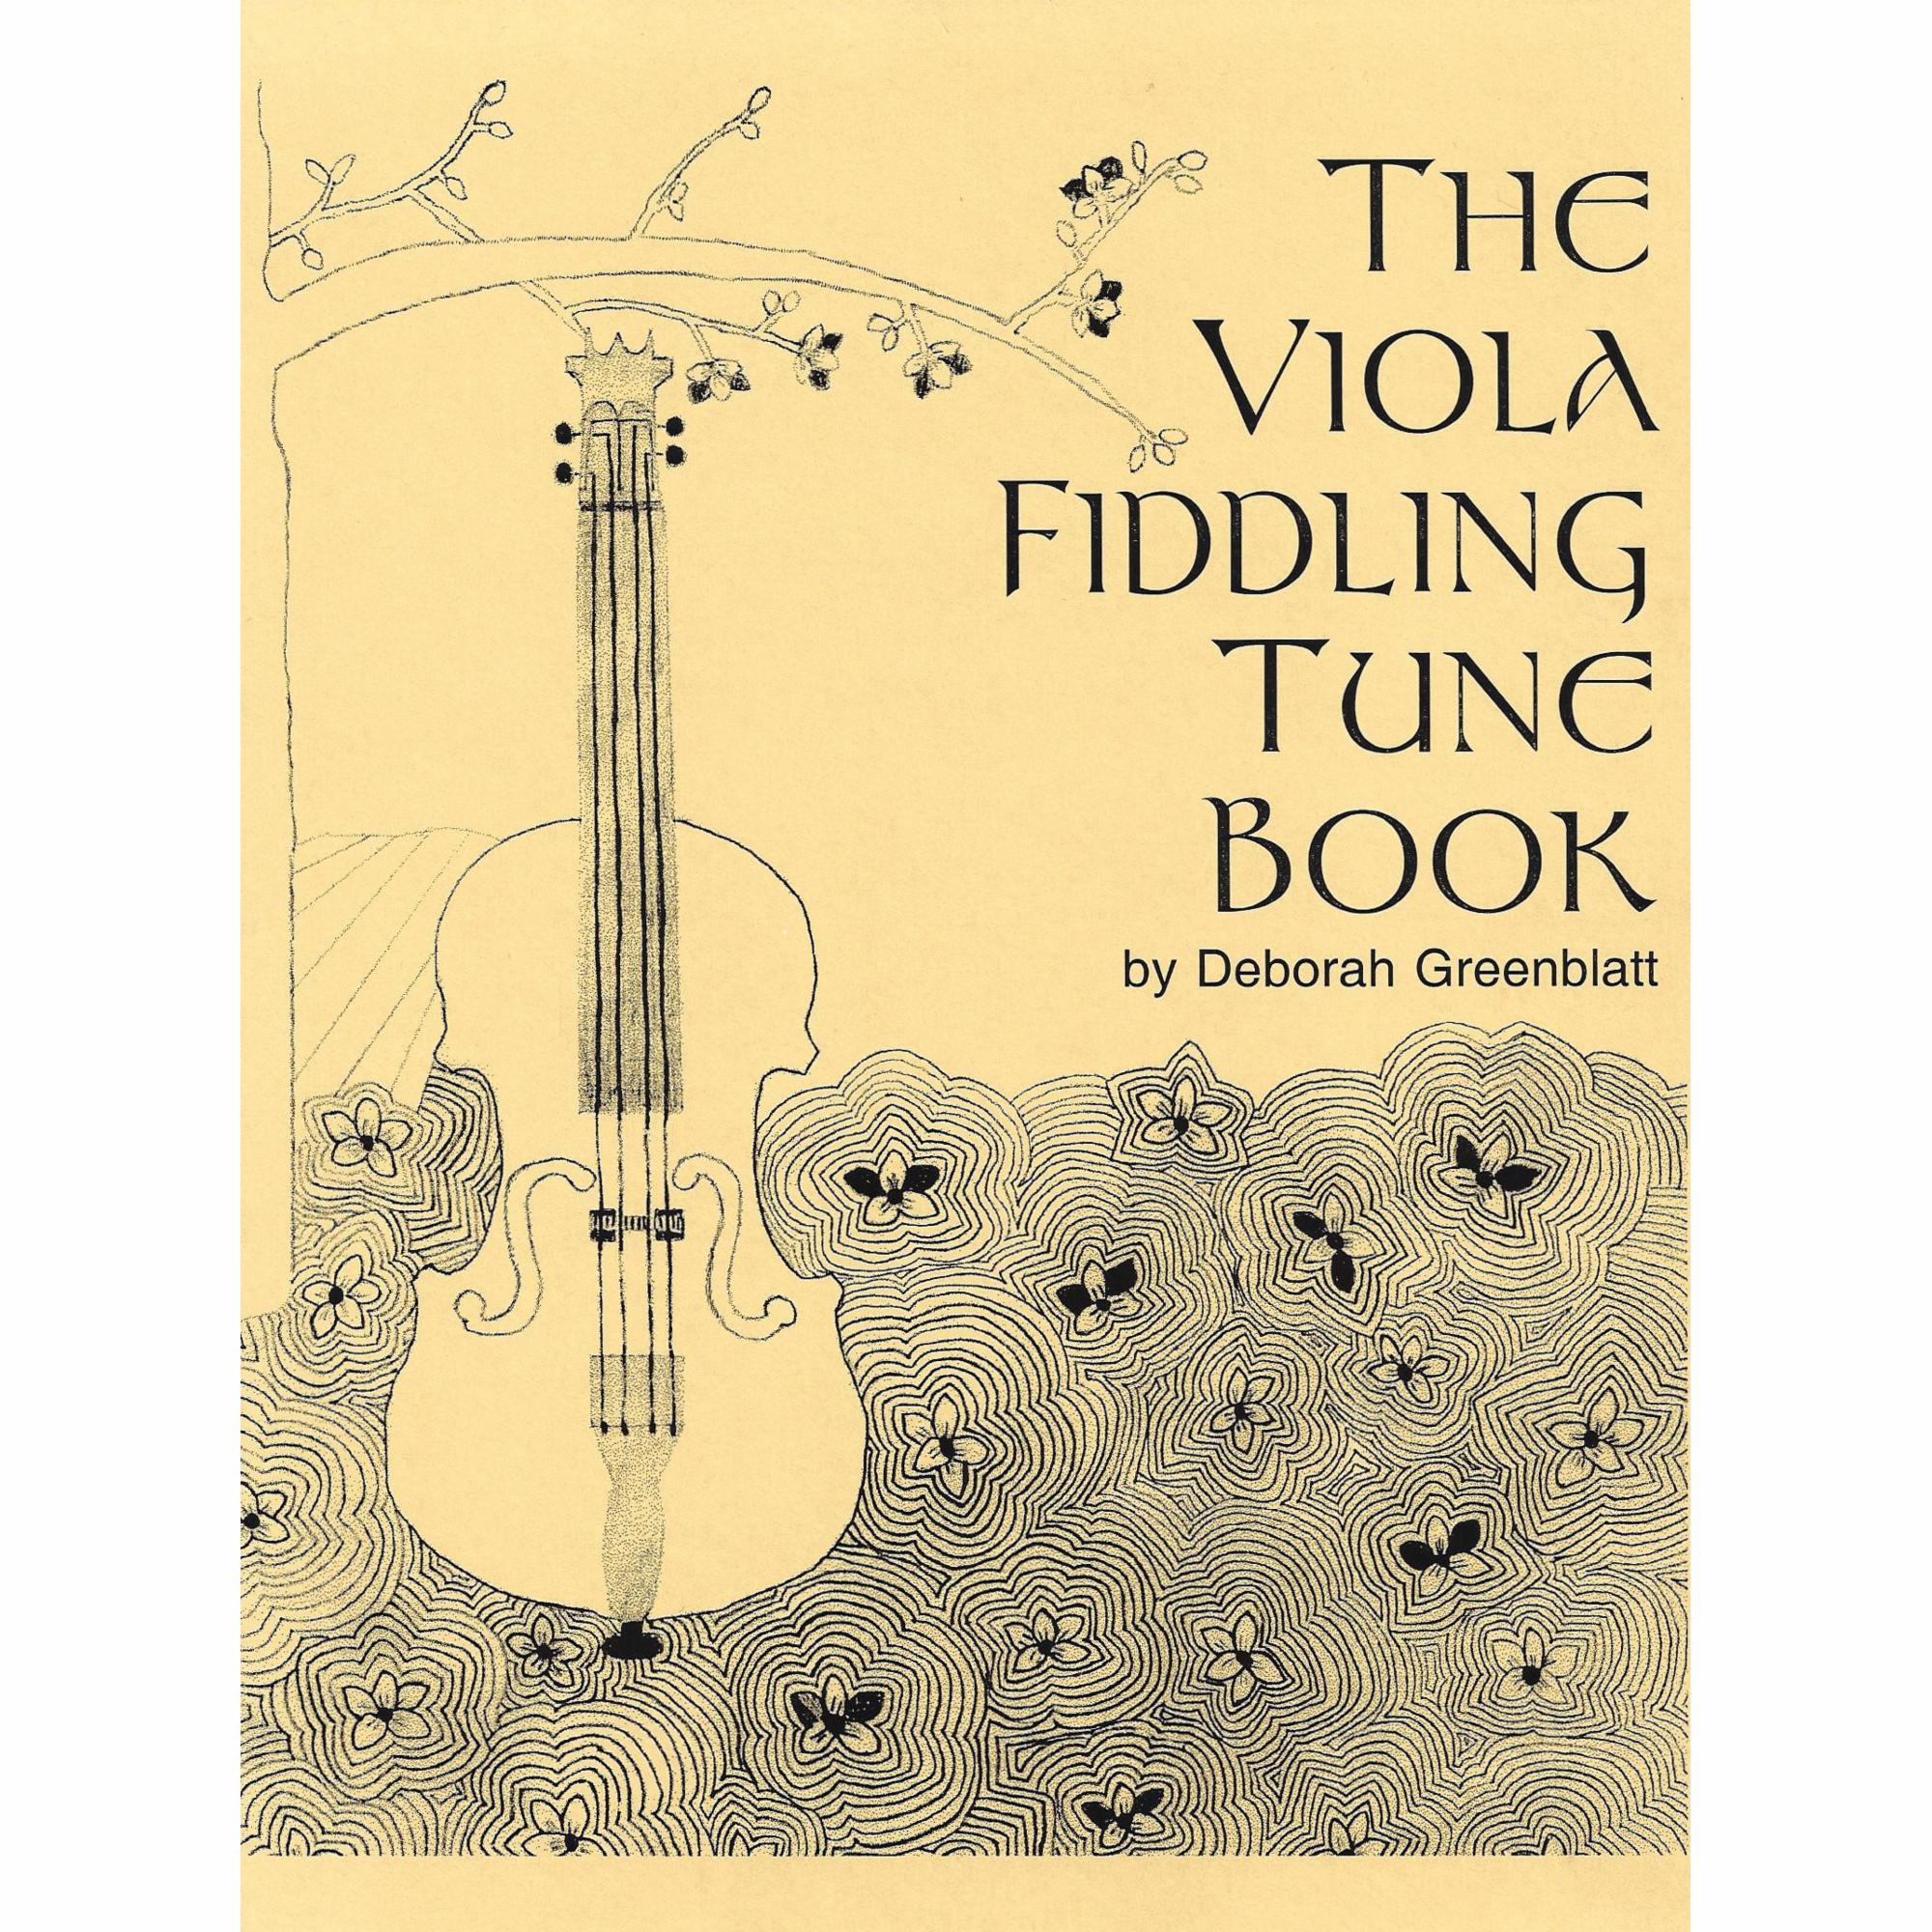 The Viola Fiddling Tune Book